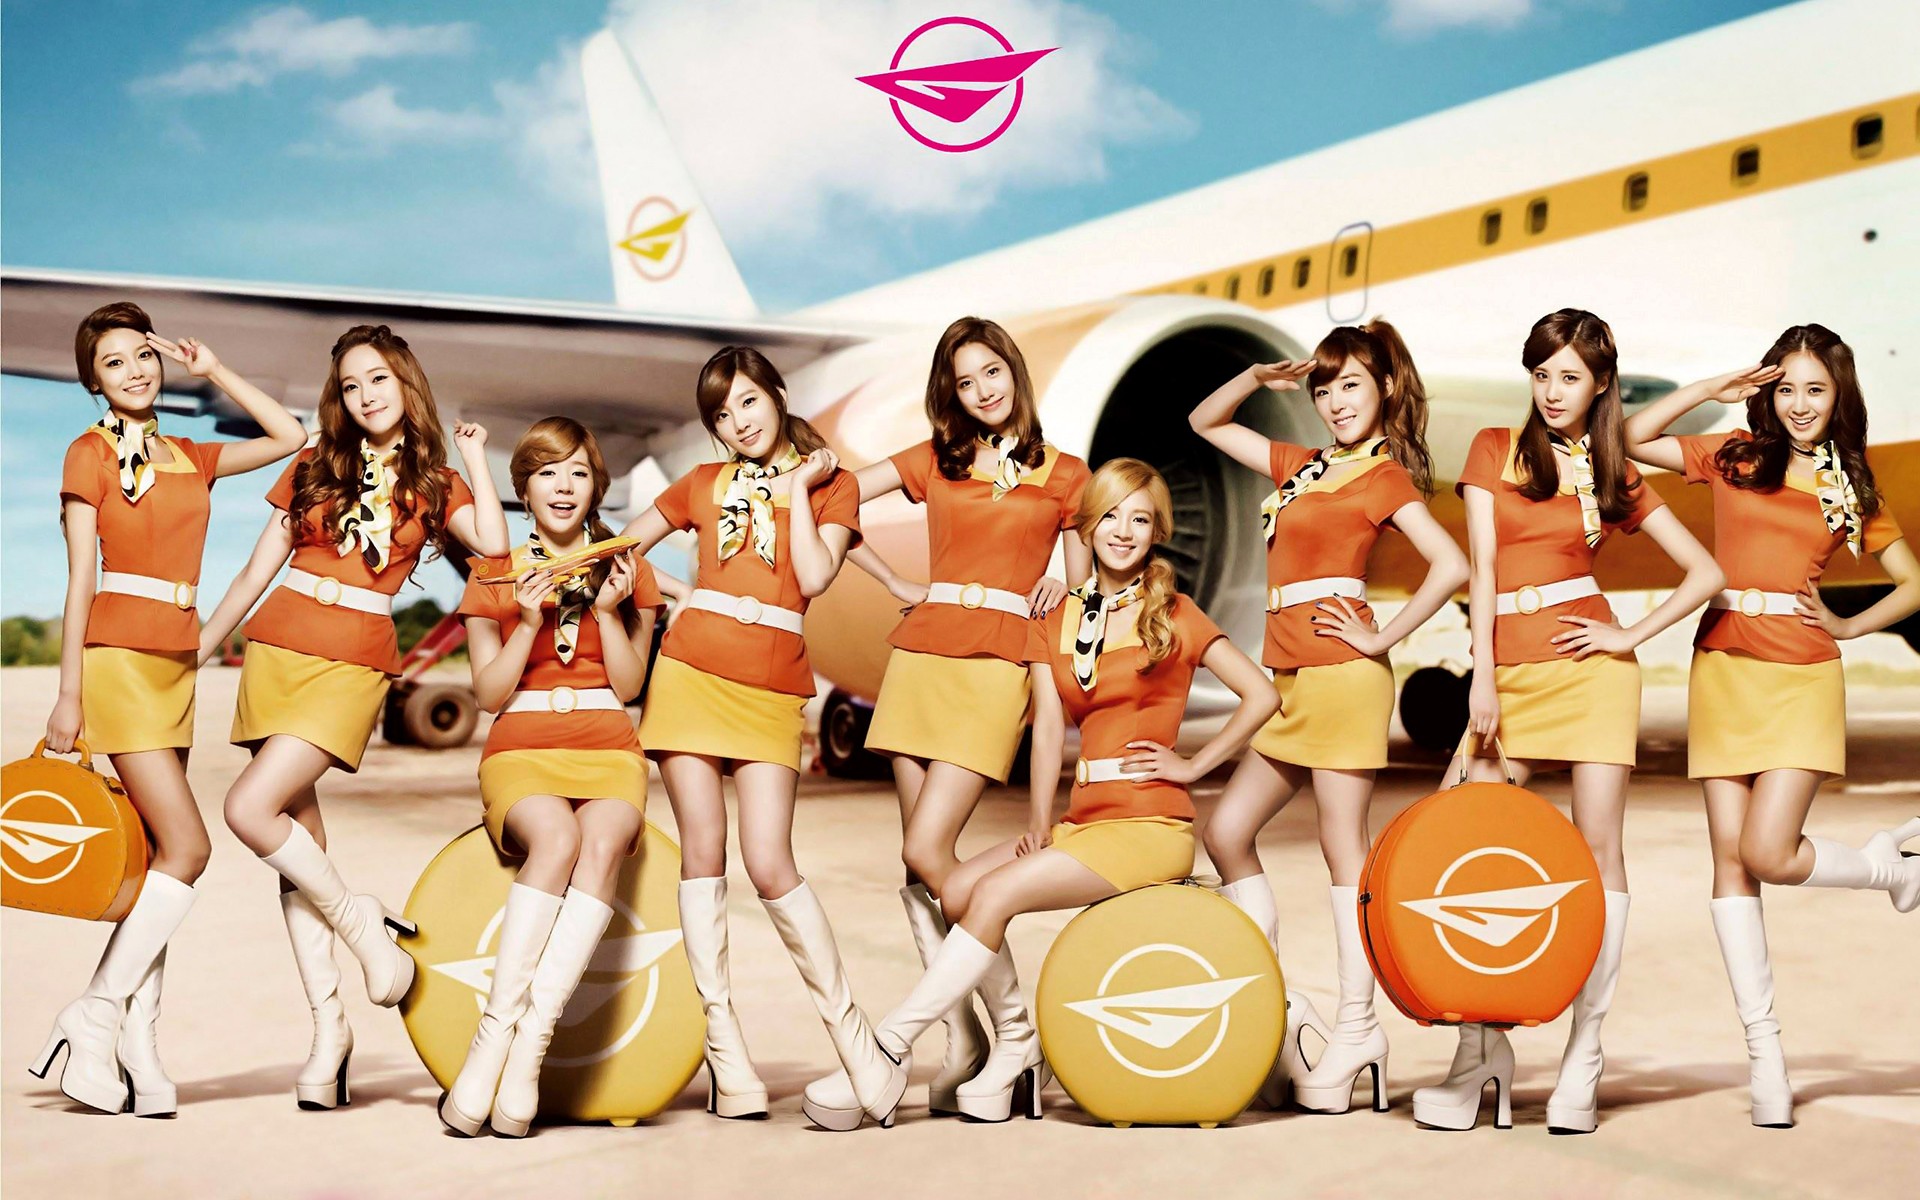 People 1920x1200 Girls' Generation K-pop singer airplane women Asian group of women smiling looking at viewer brunette blonde standing sitting brown eyes Korean women